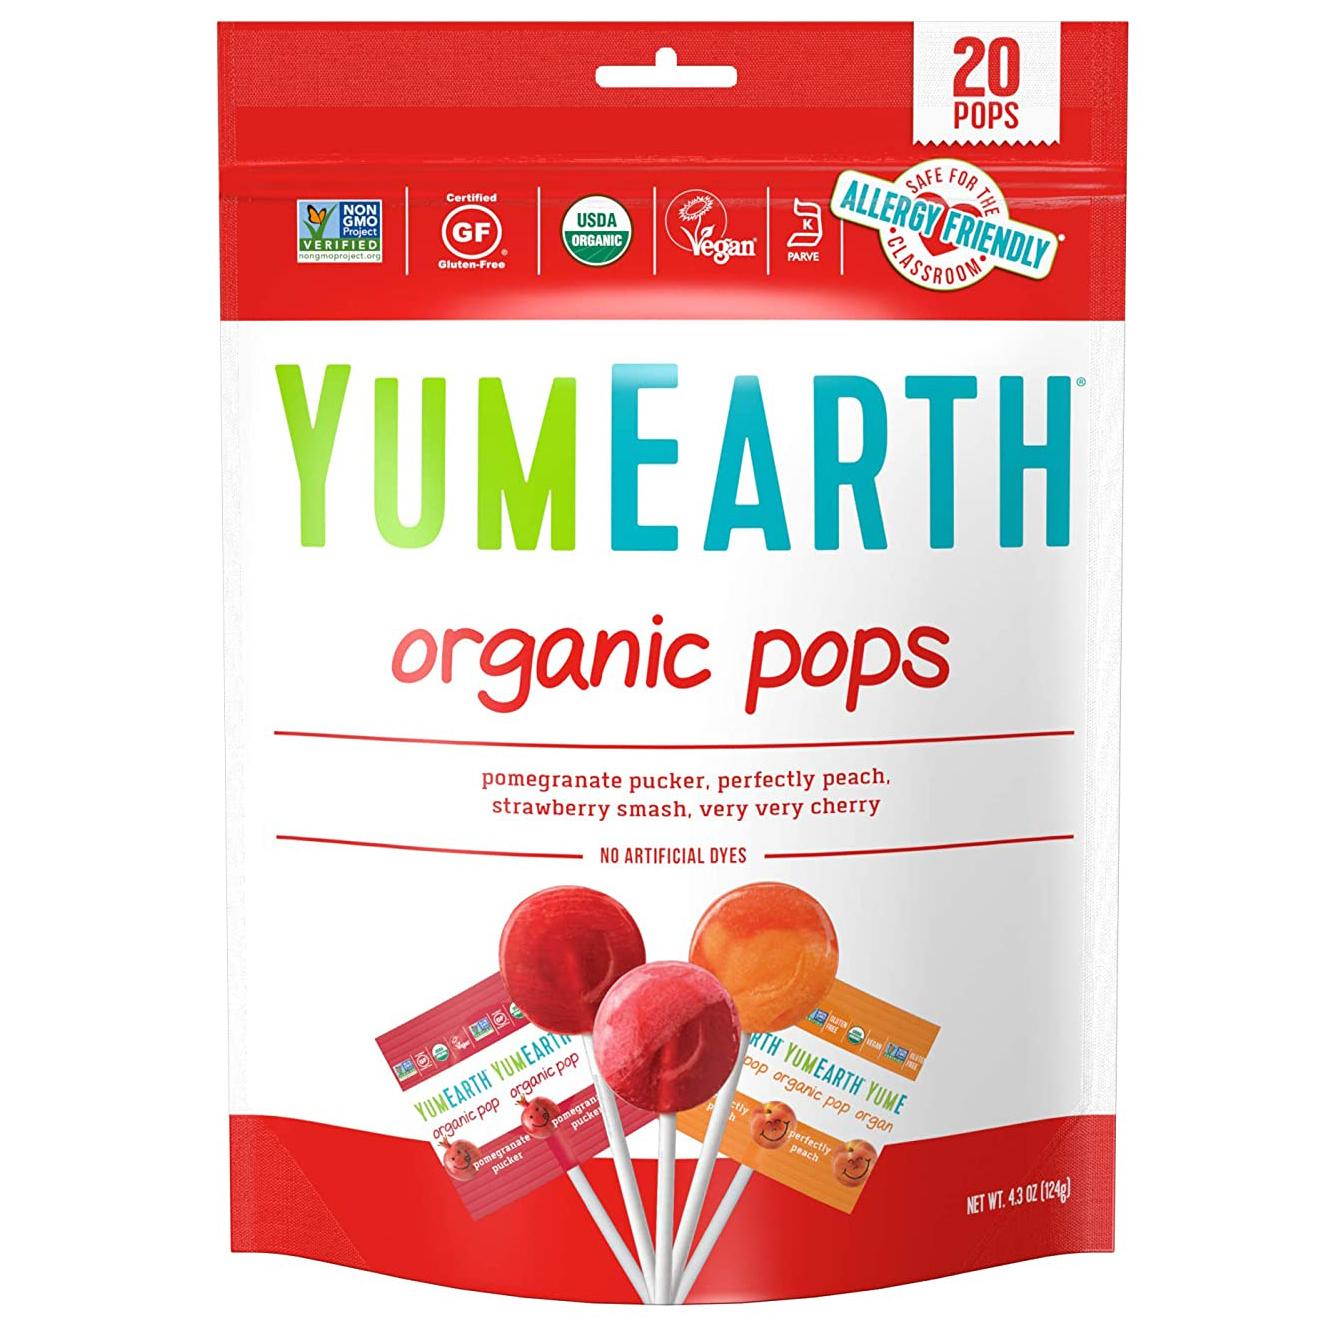 20 YumEarth Organic Lollipops for $1.89 Shipped